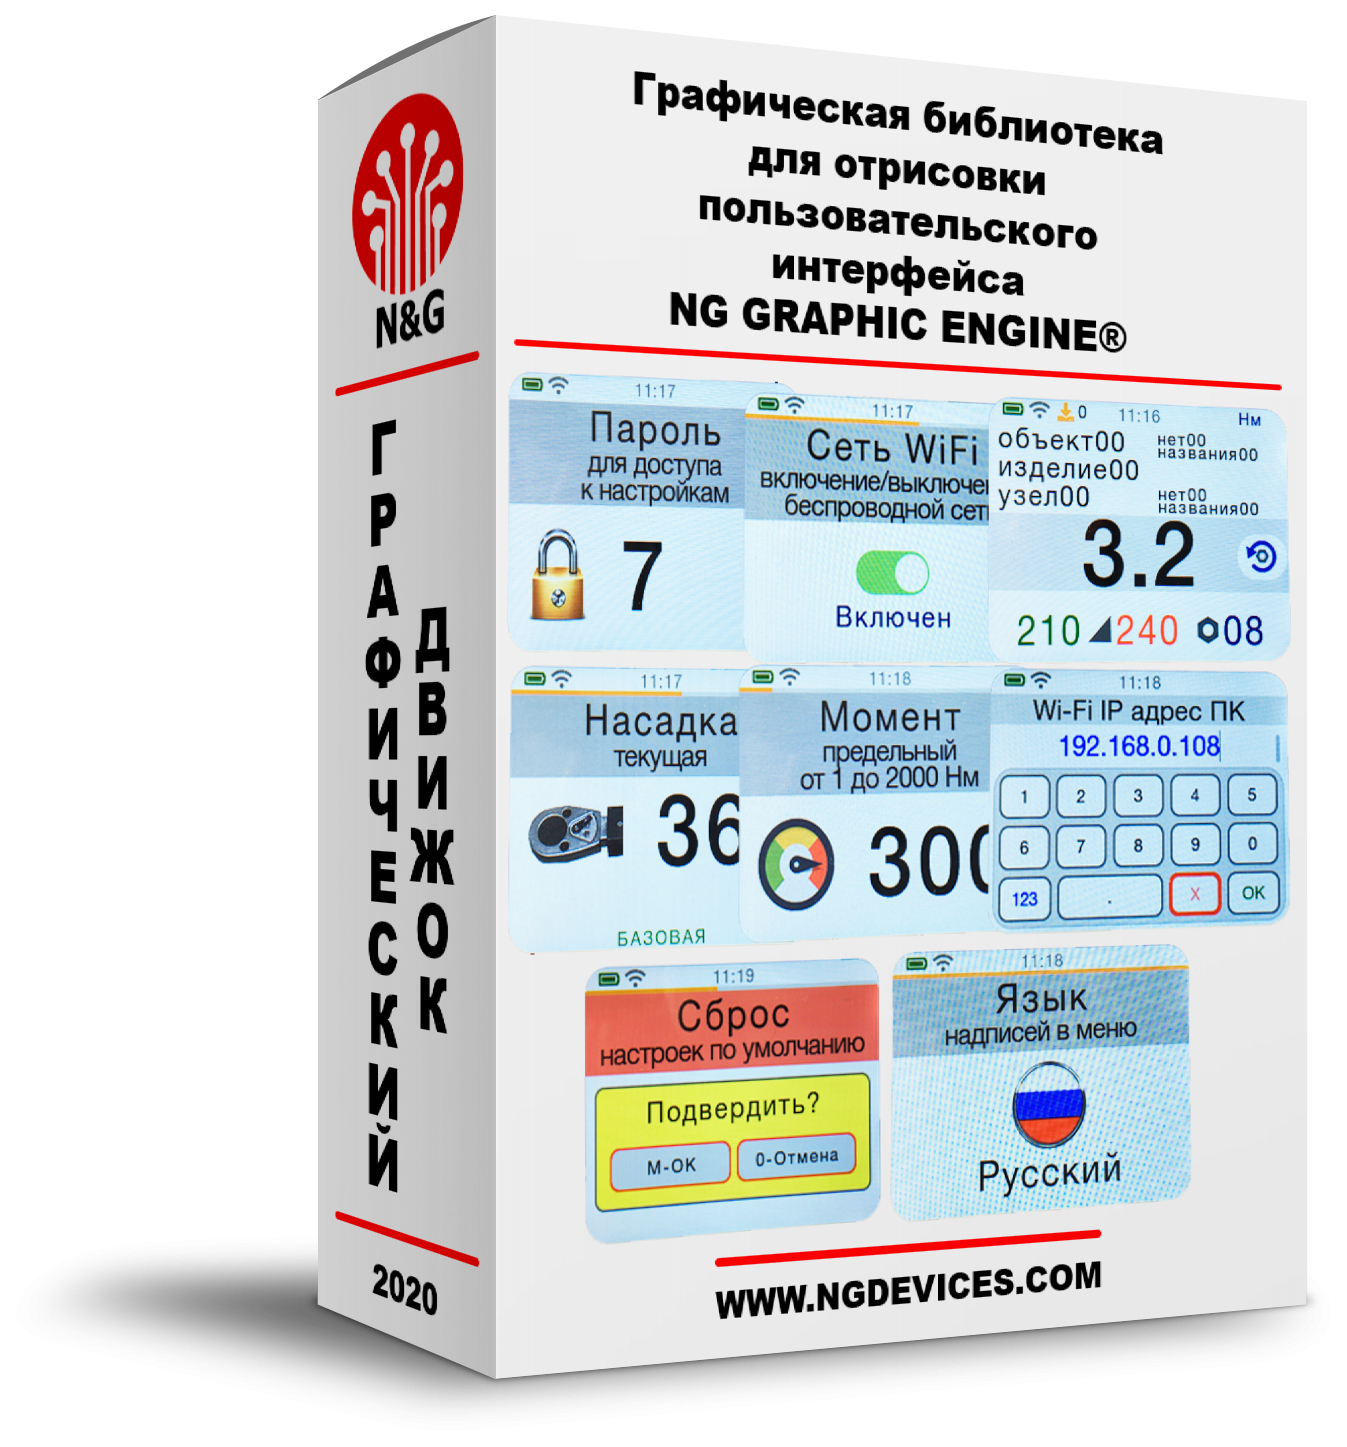 NG Graphic Engine